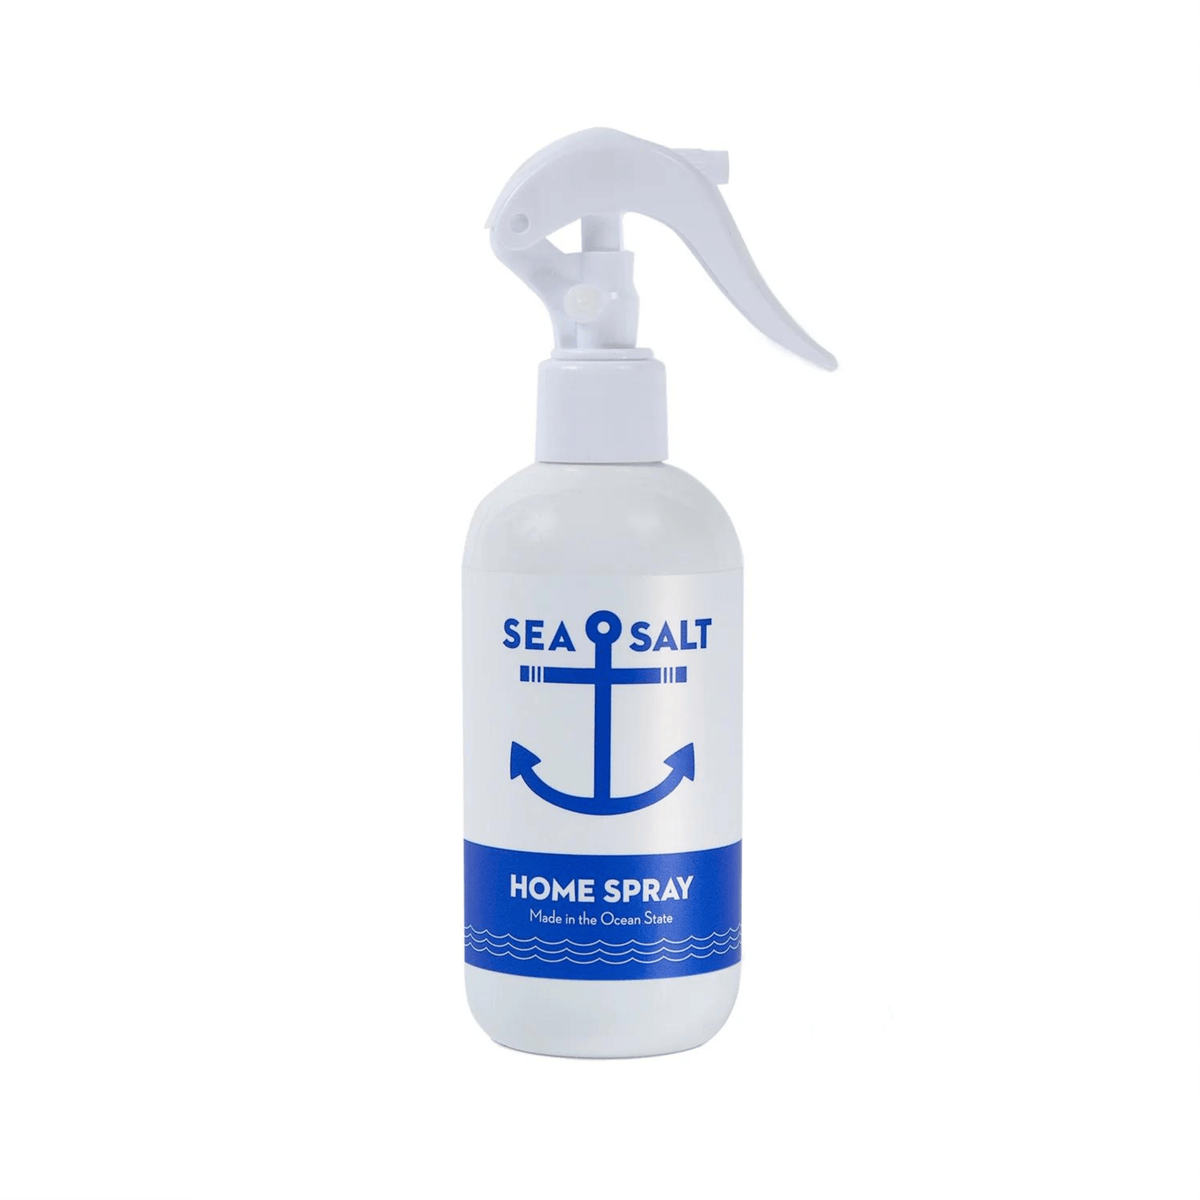 Primary Image of Sea Salt Home Spray